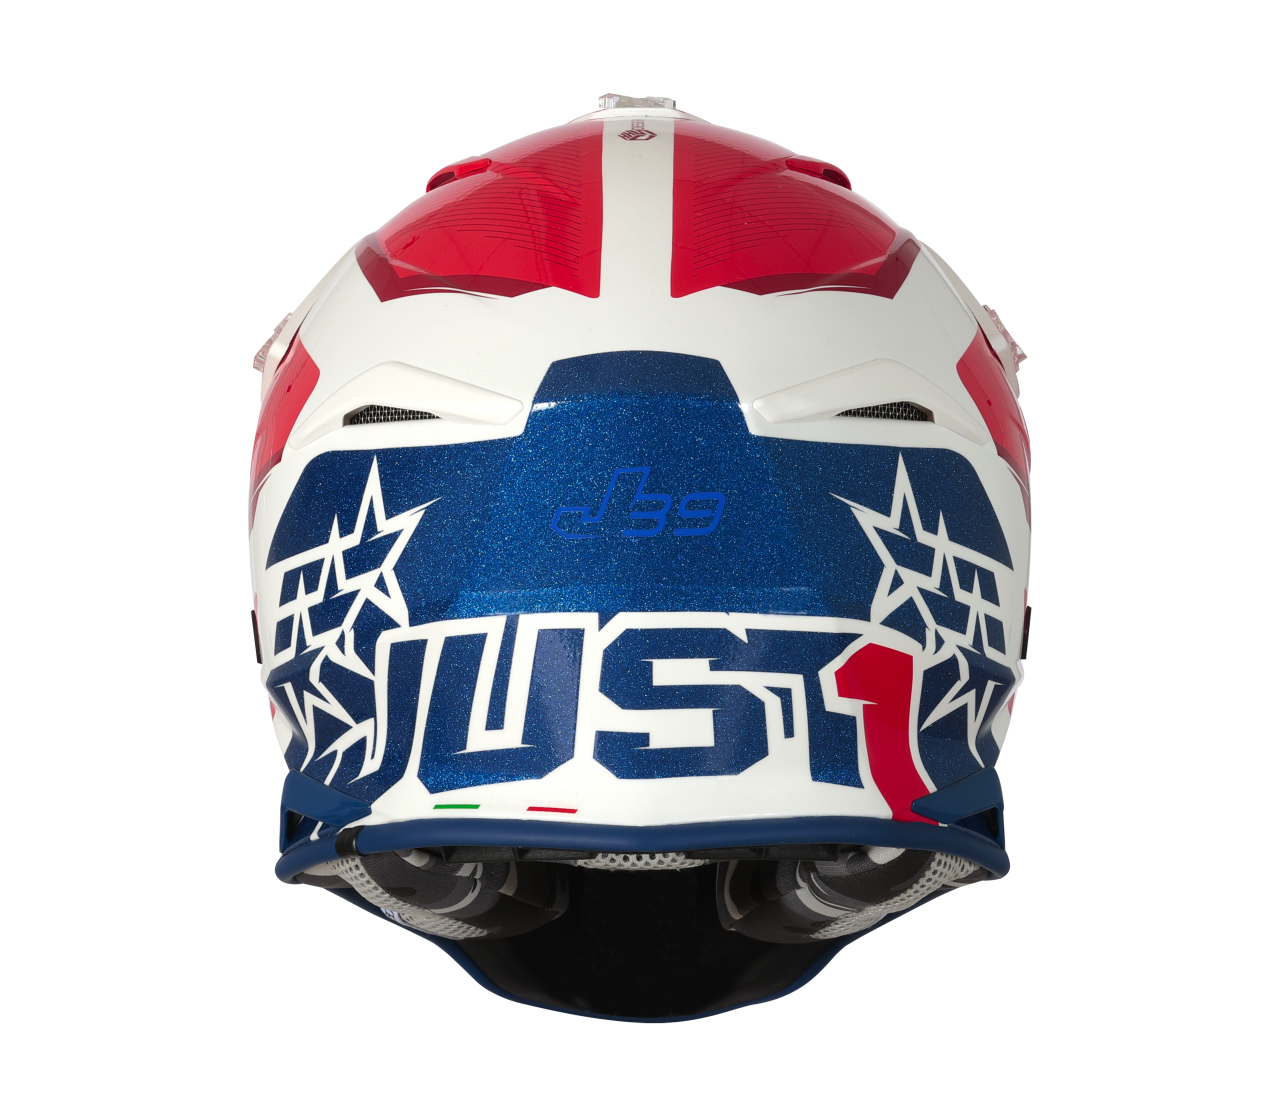 Just1 J39 Stars MX Helmet (2 Colors)